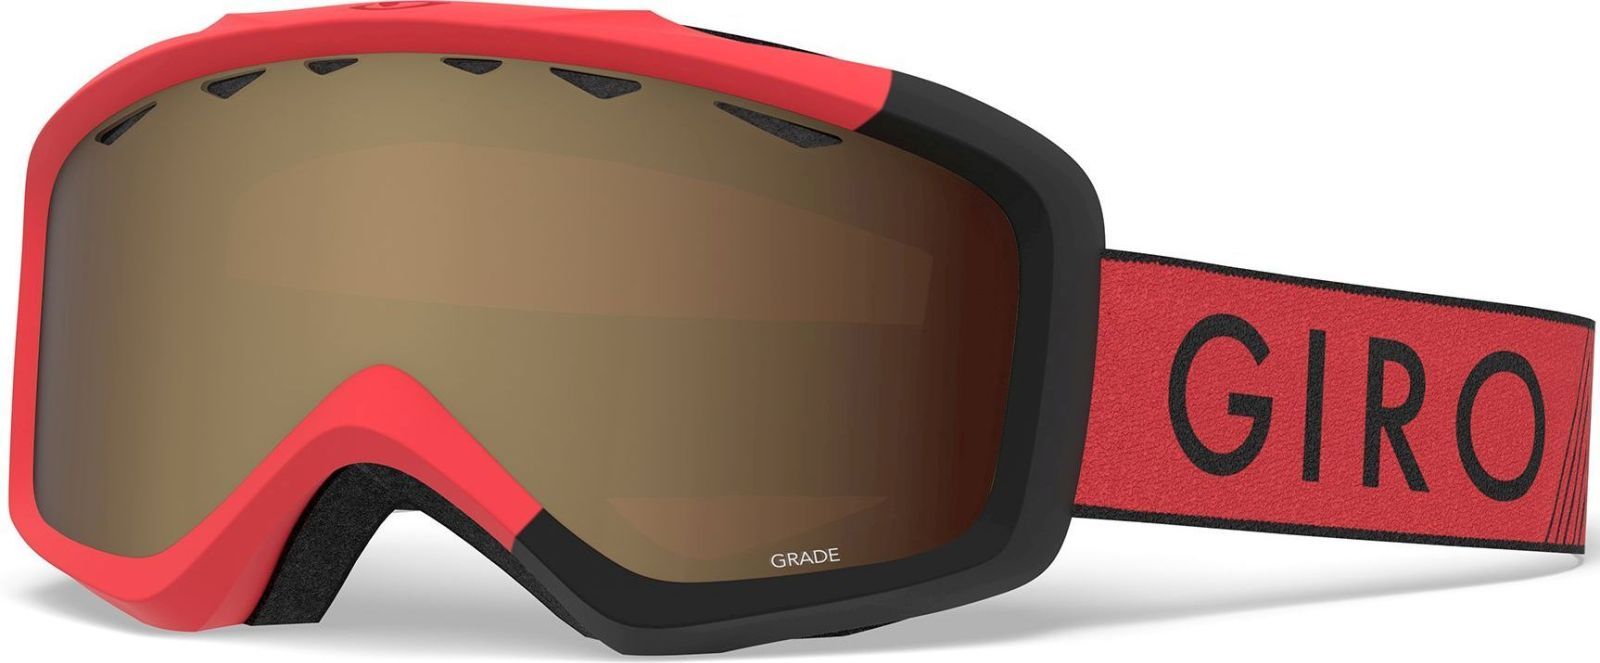 Giro Grade - Red/Black Zoom AR40 uni - obrázek 1